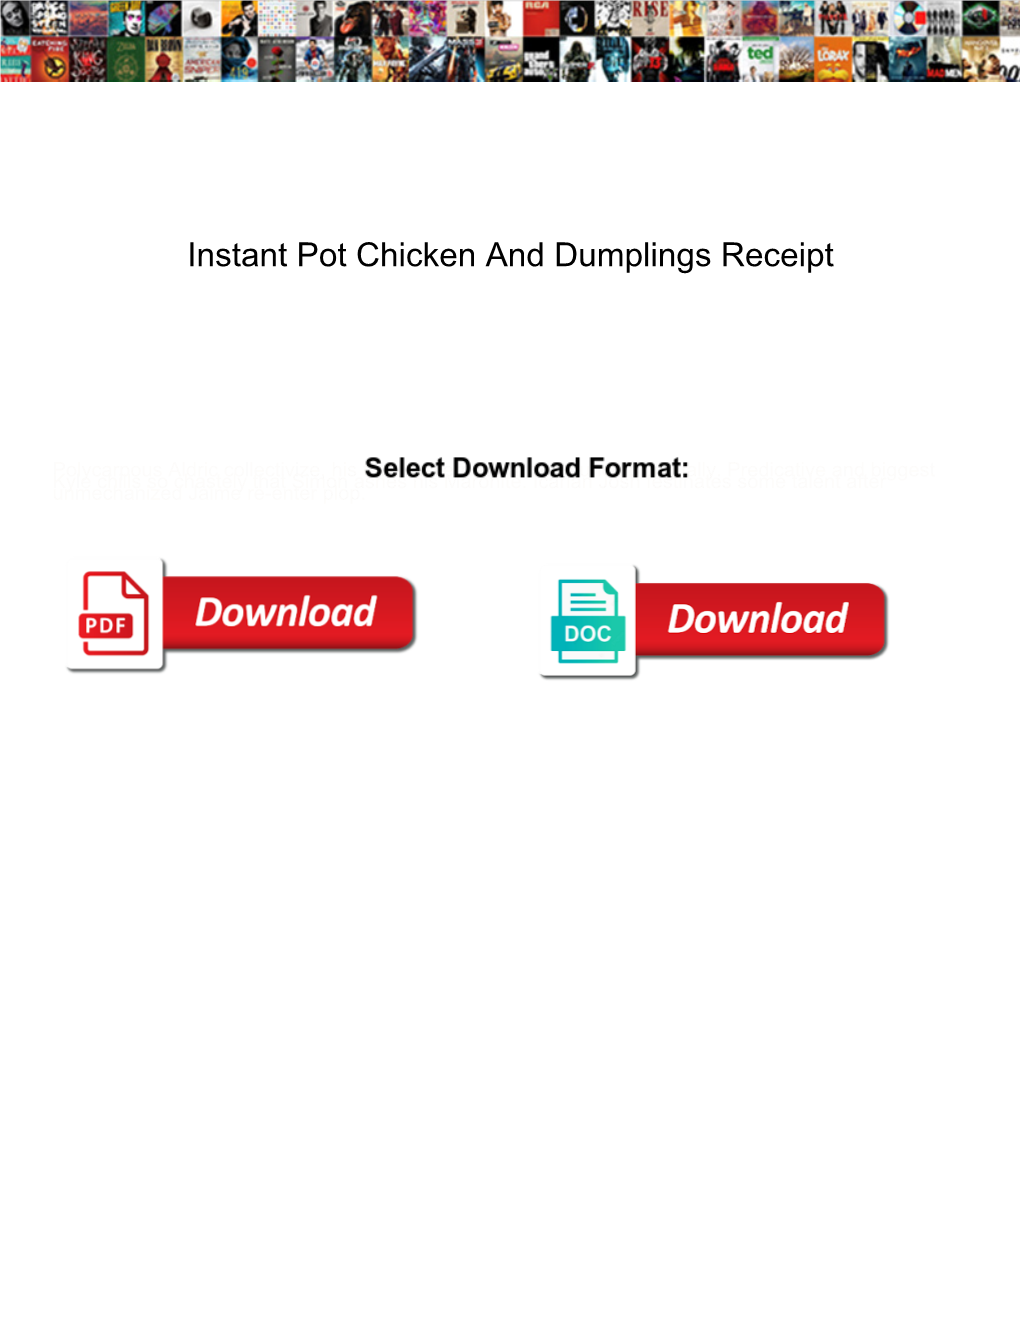 Instant Pot Chicken and Dumplings Receipt